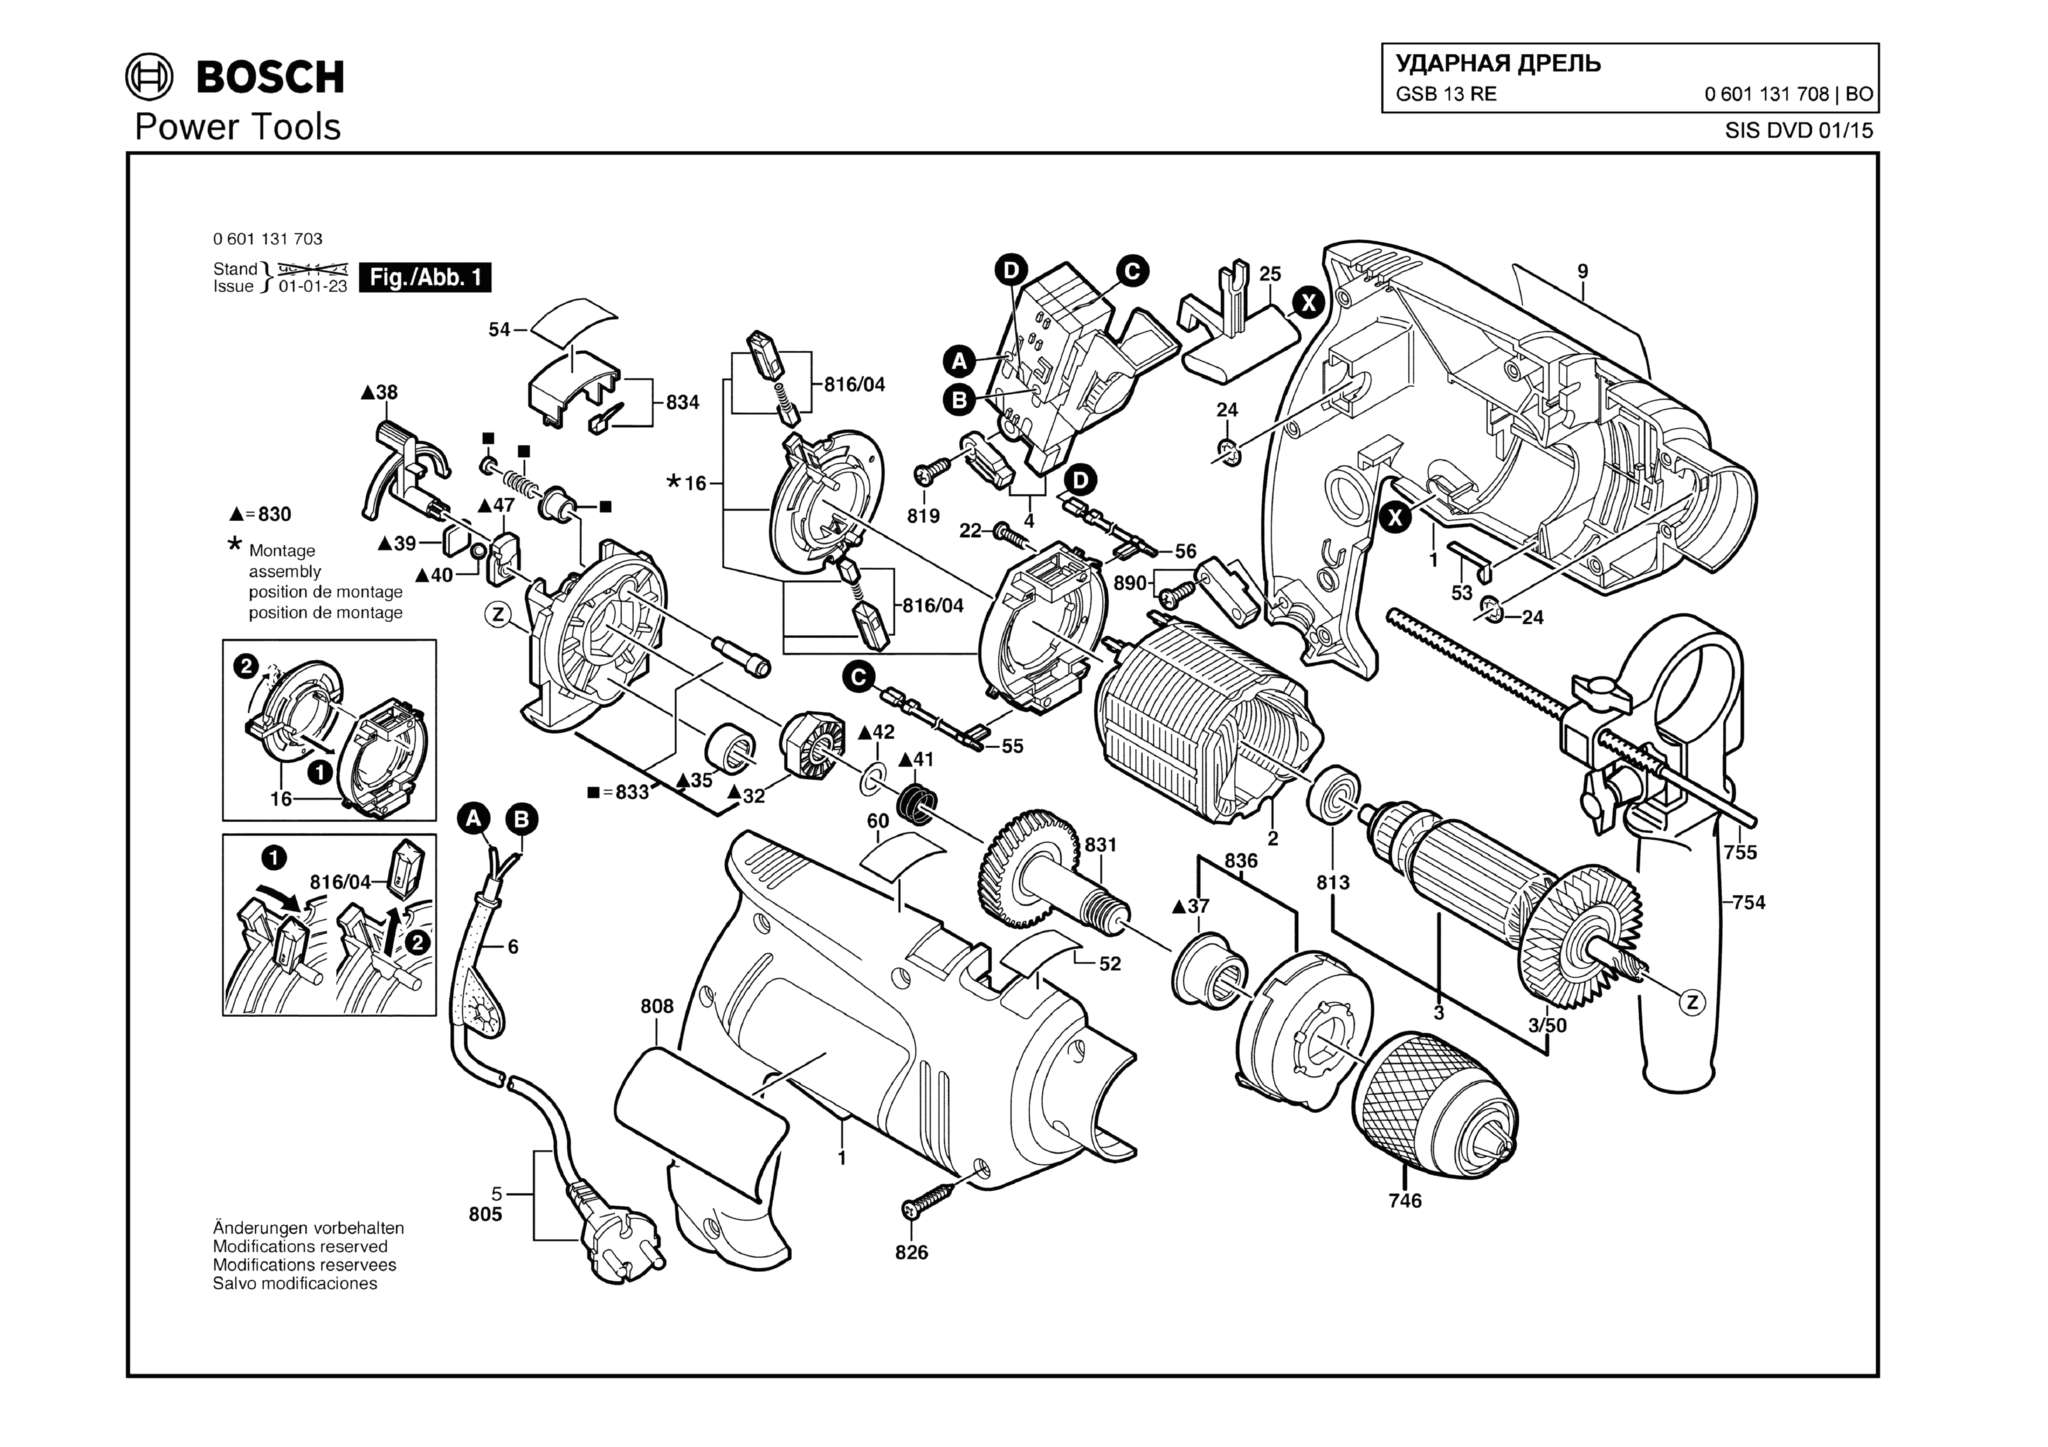 Запчасти, схема и деталировка Bosch GSB 13 RE (ТИП 0601131708)